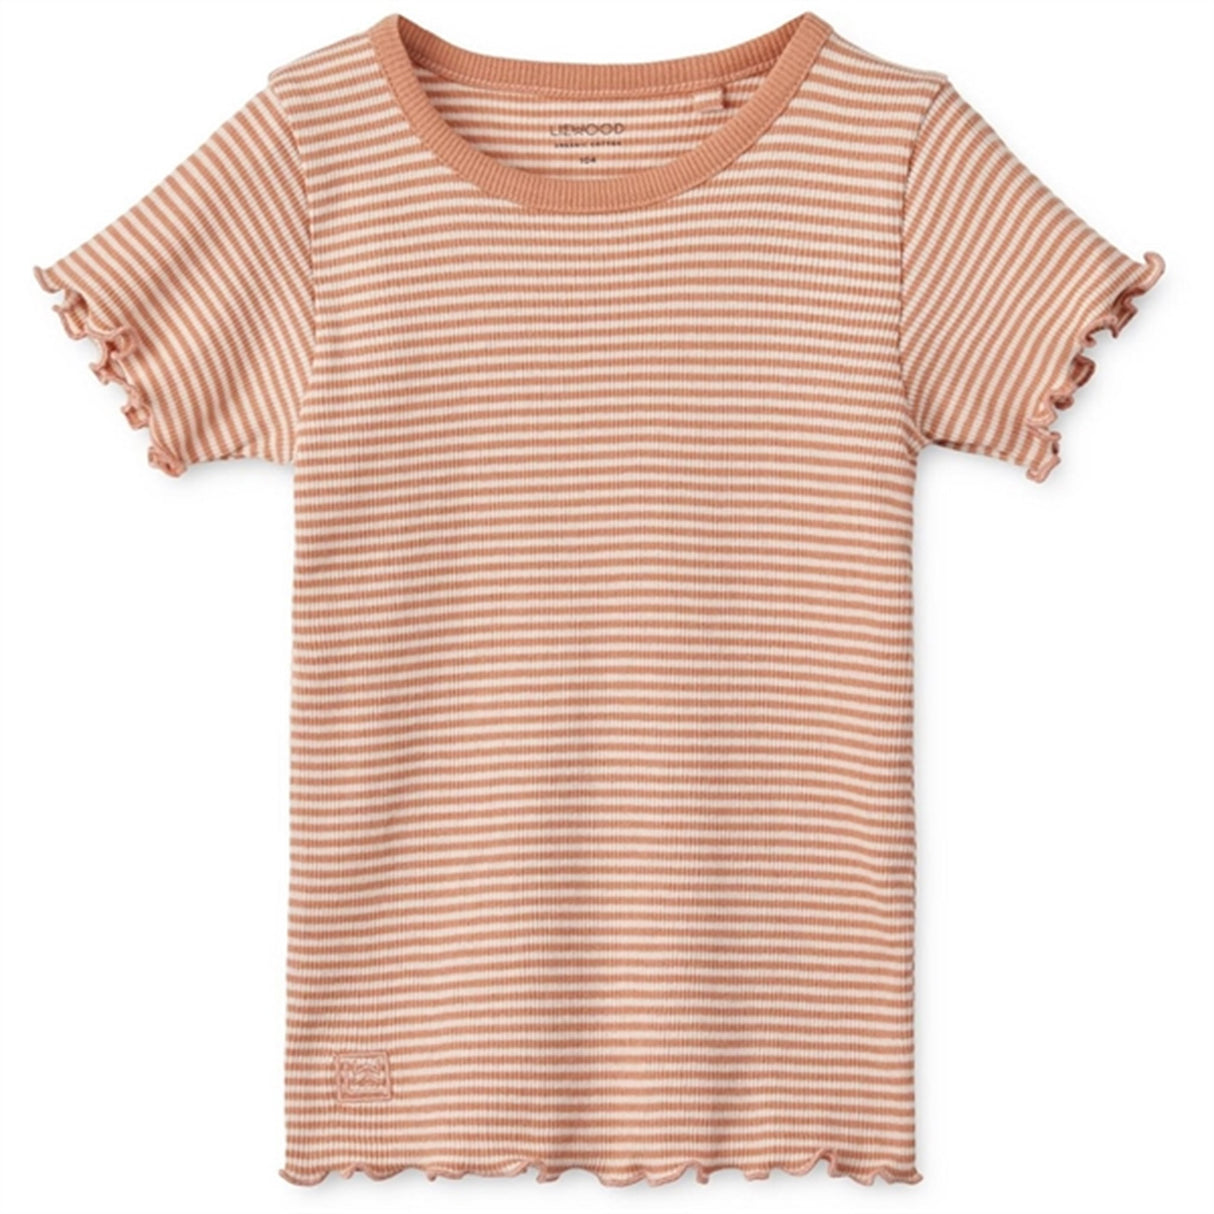 Liewood Y/D Stripe Tuscany Rose/Sandy Nieve Stripe Rib T-shirt